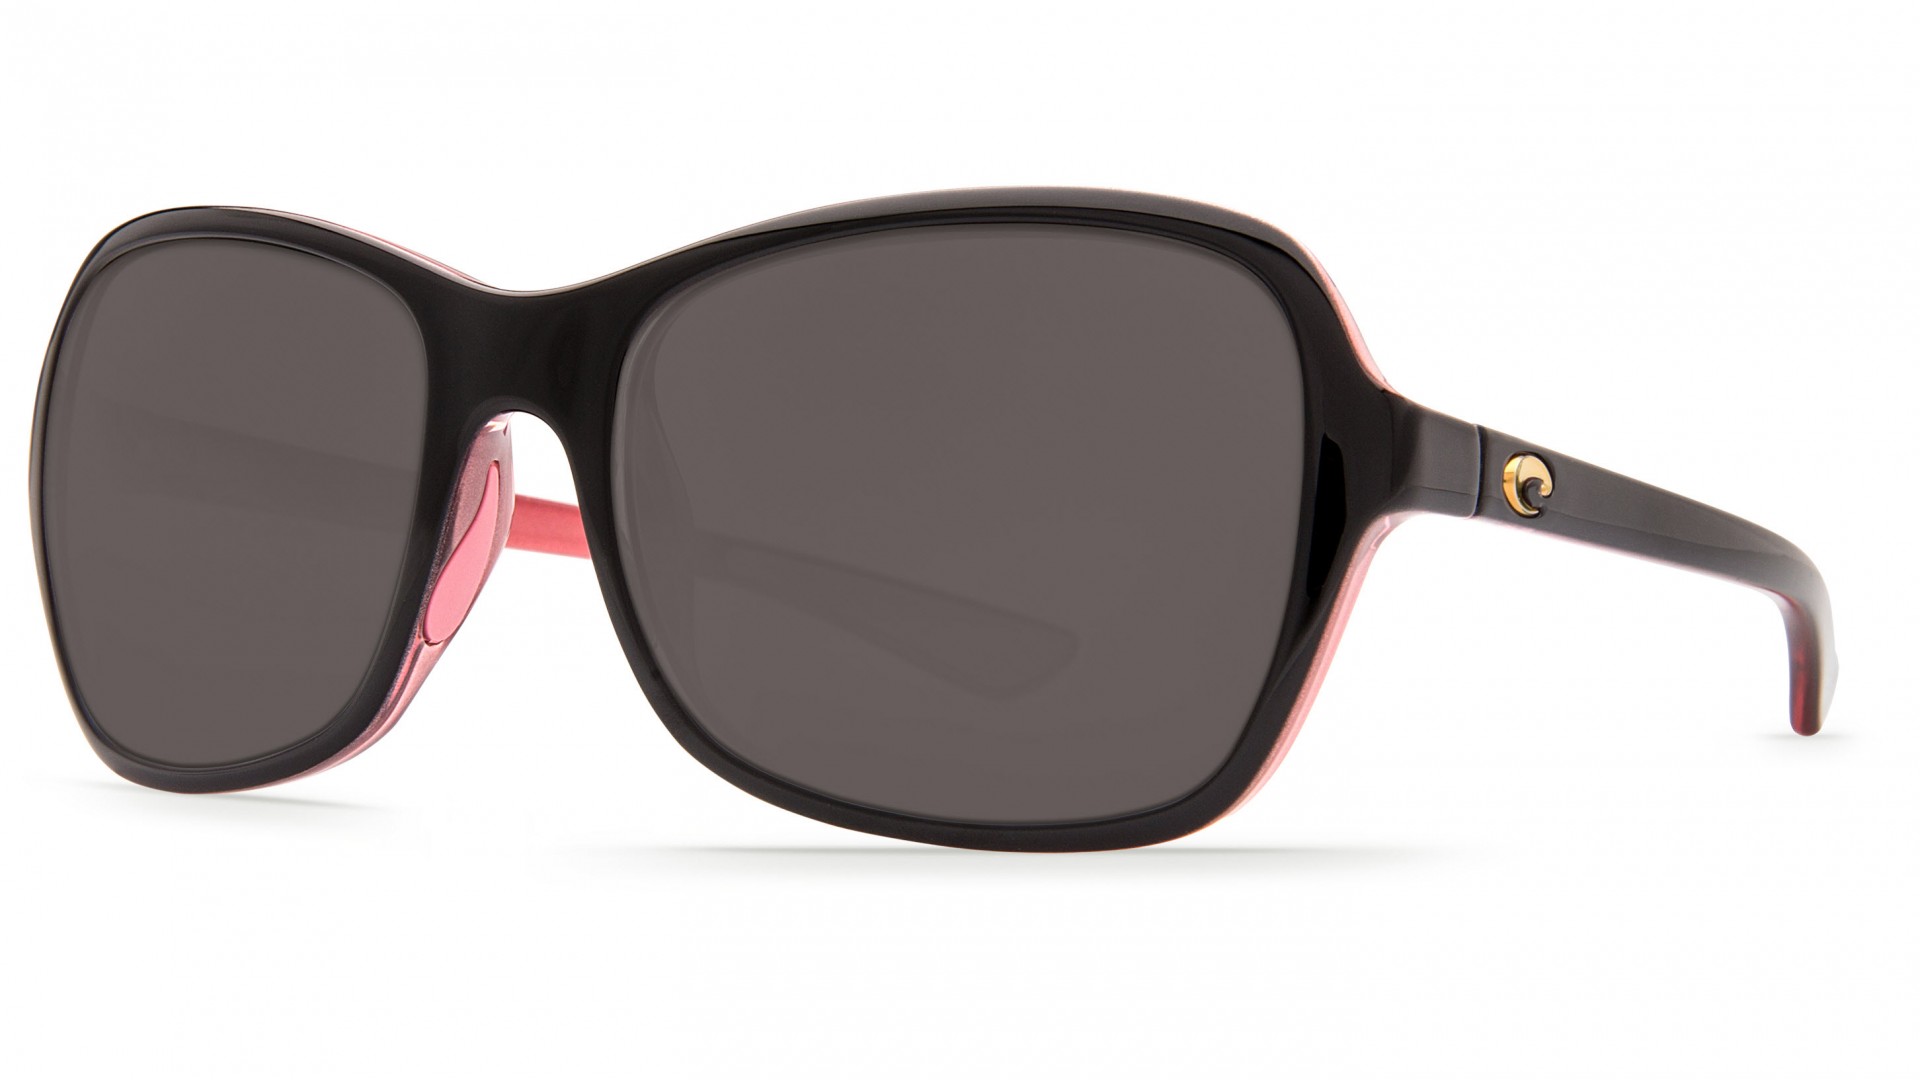 Download Sunglasses Emoji Meaning, Sunglasses Emoji - Women's Costa Del Mar Sunglasses , HD Wallpaper & Backgrounds